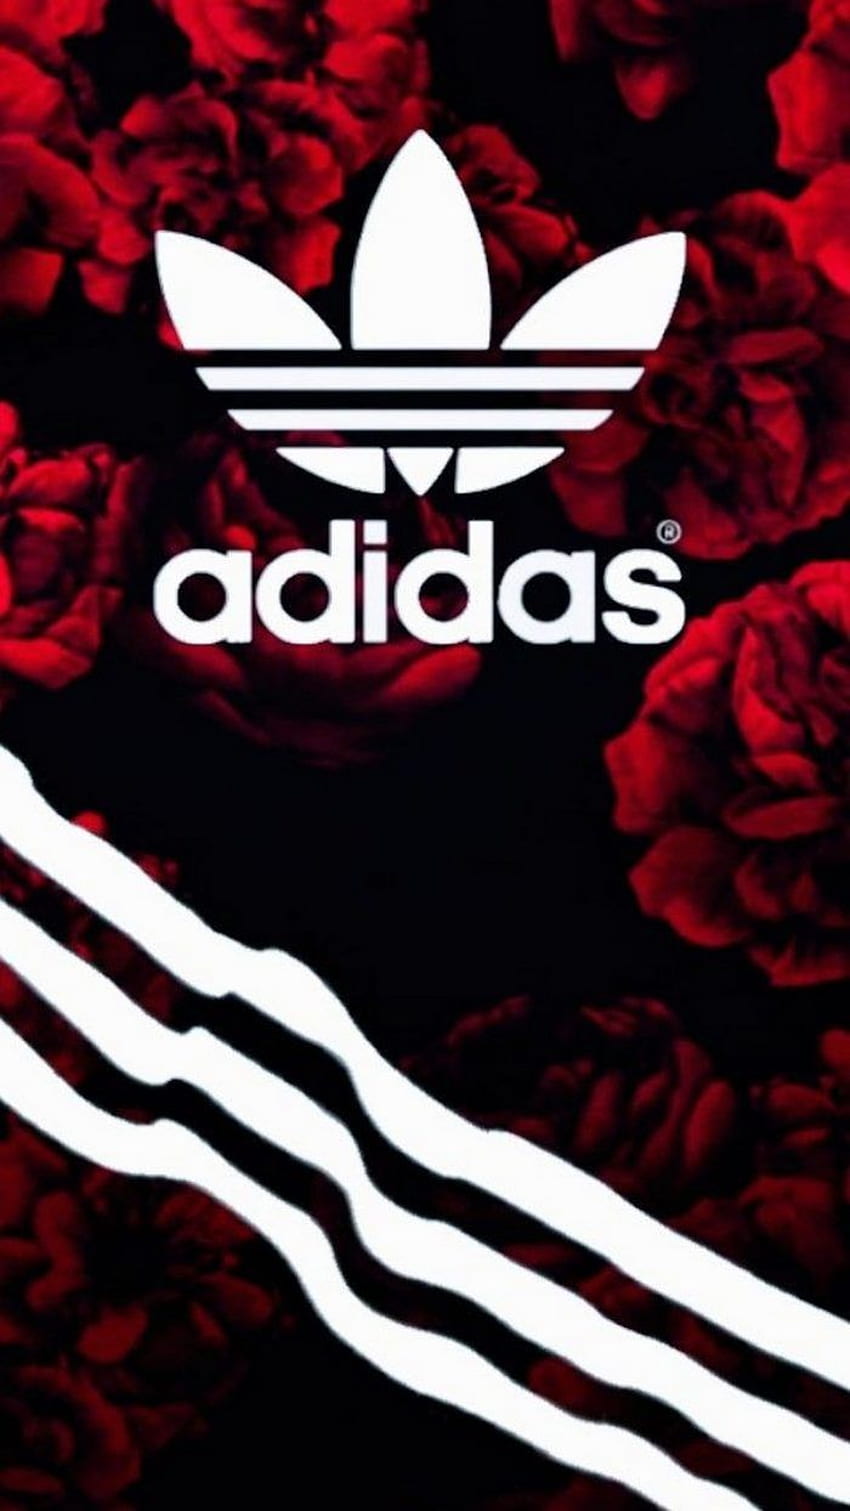 Adidas for iPhone. Adidas, Adidas Girly HD phone wallpaper